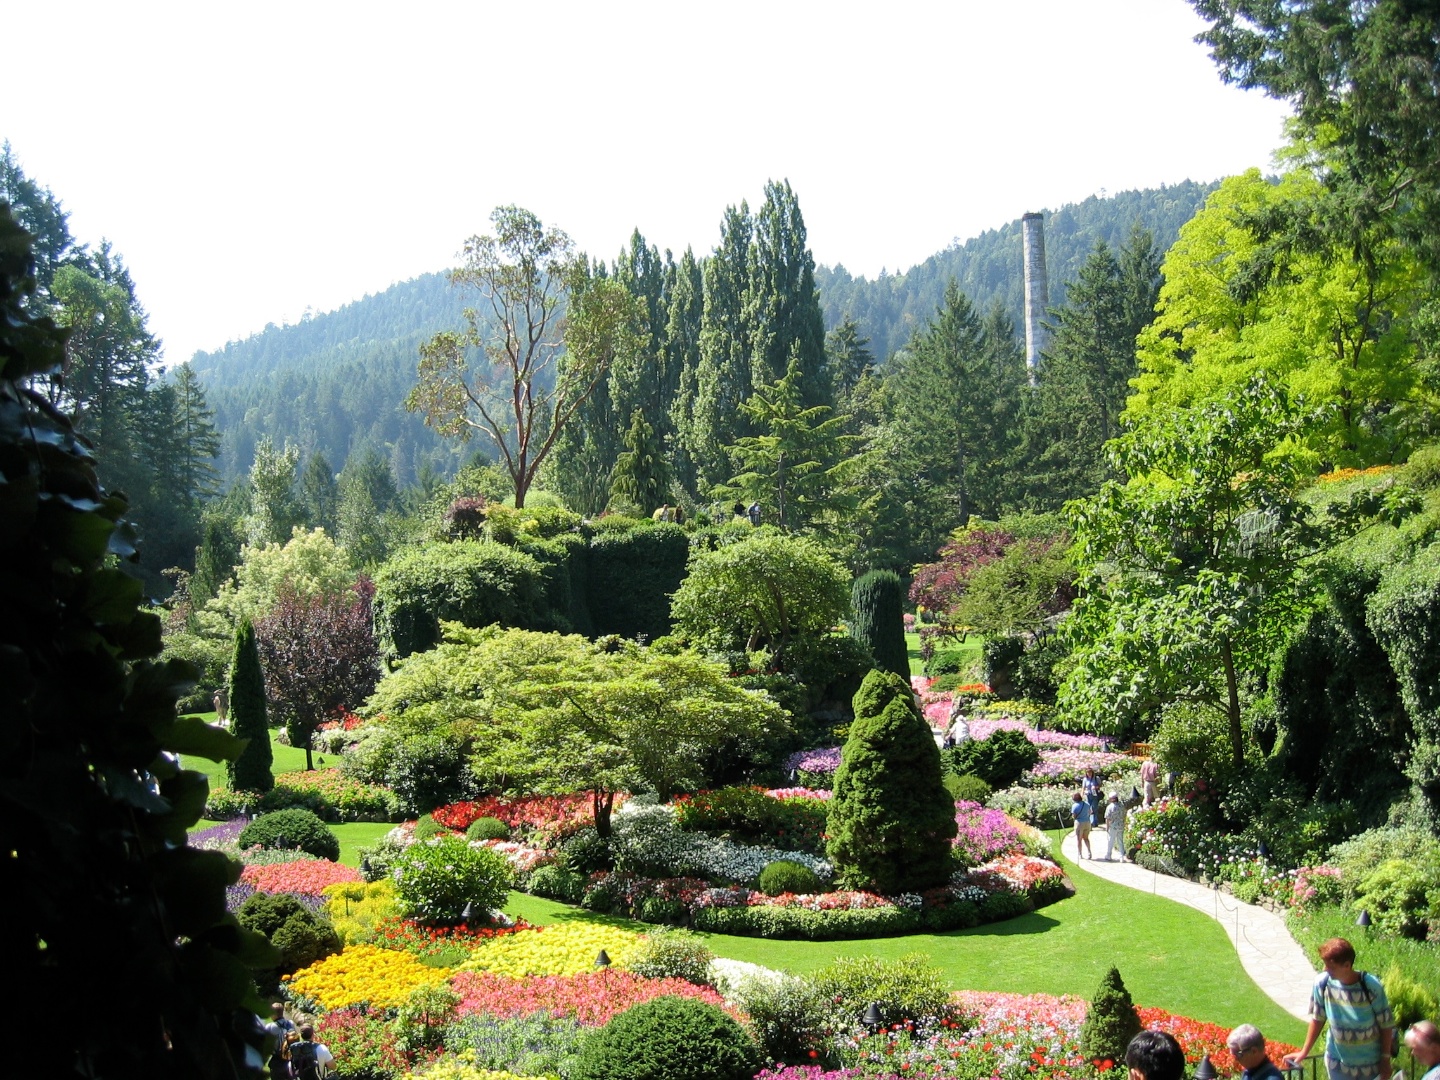 Butchart Gardens, Brentwood Bay, British Columbia, Canada